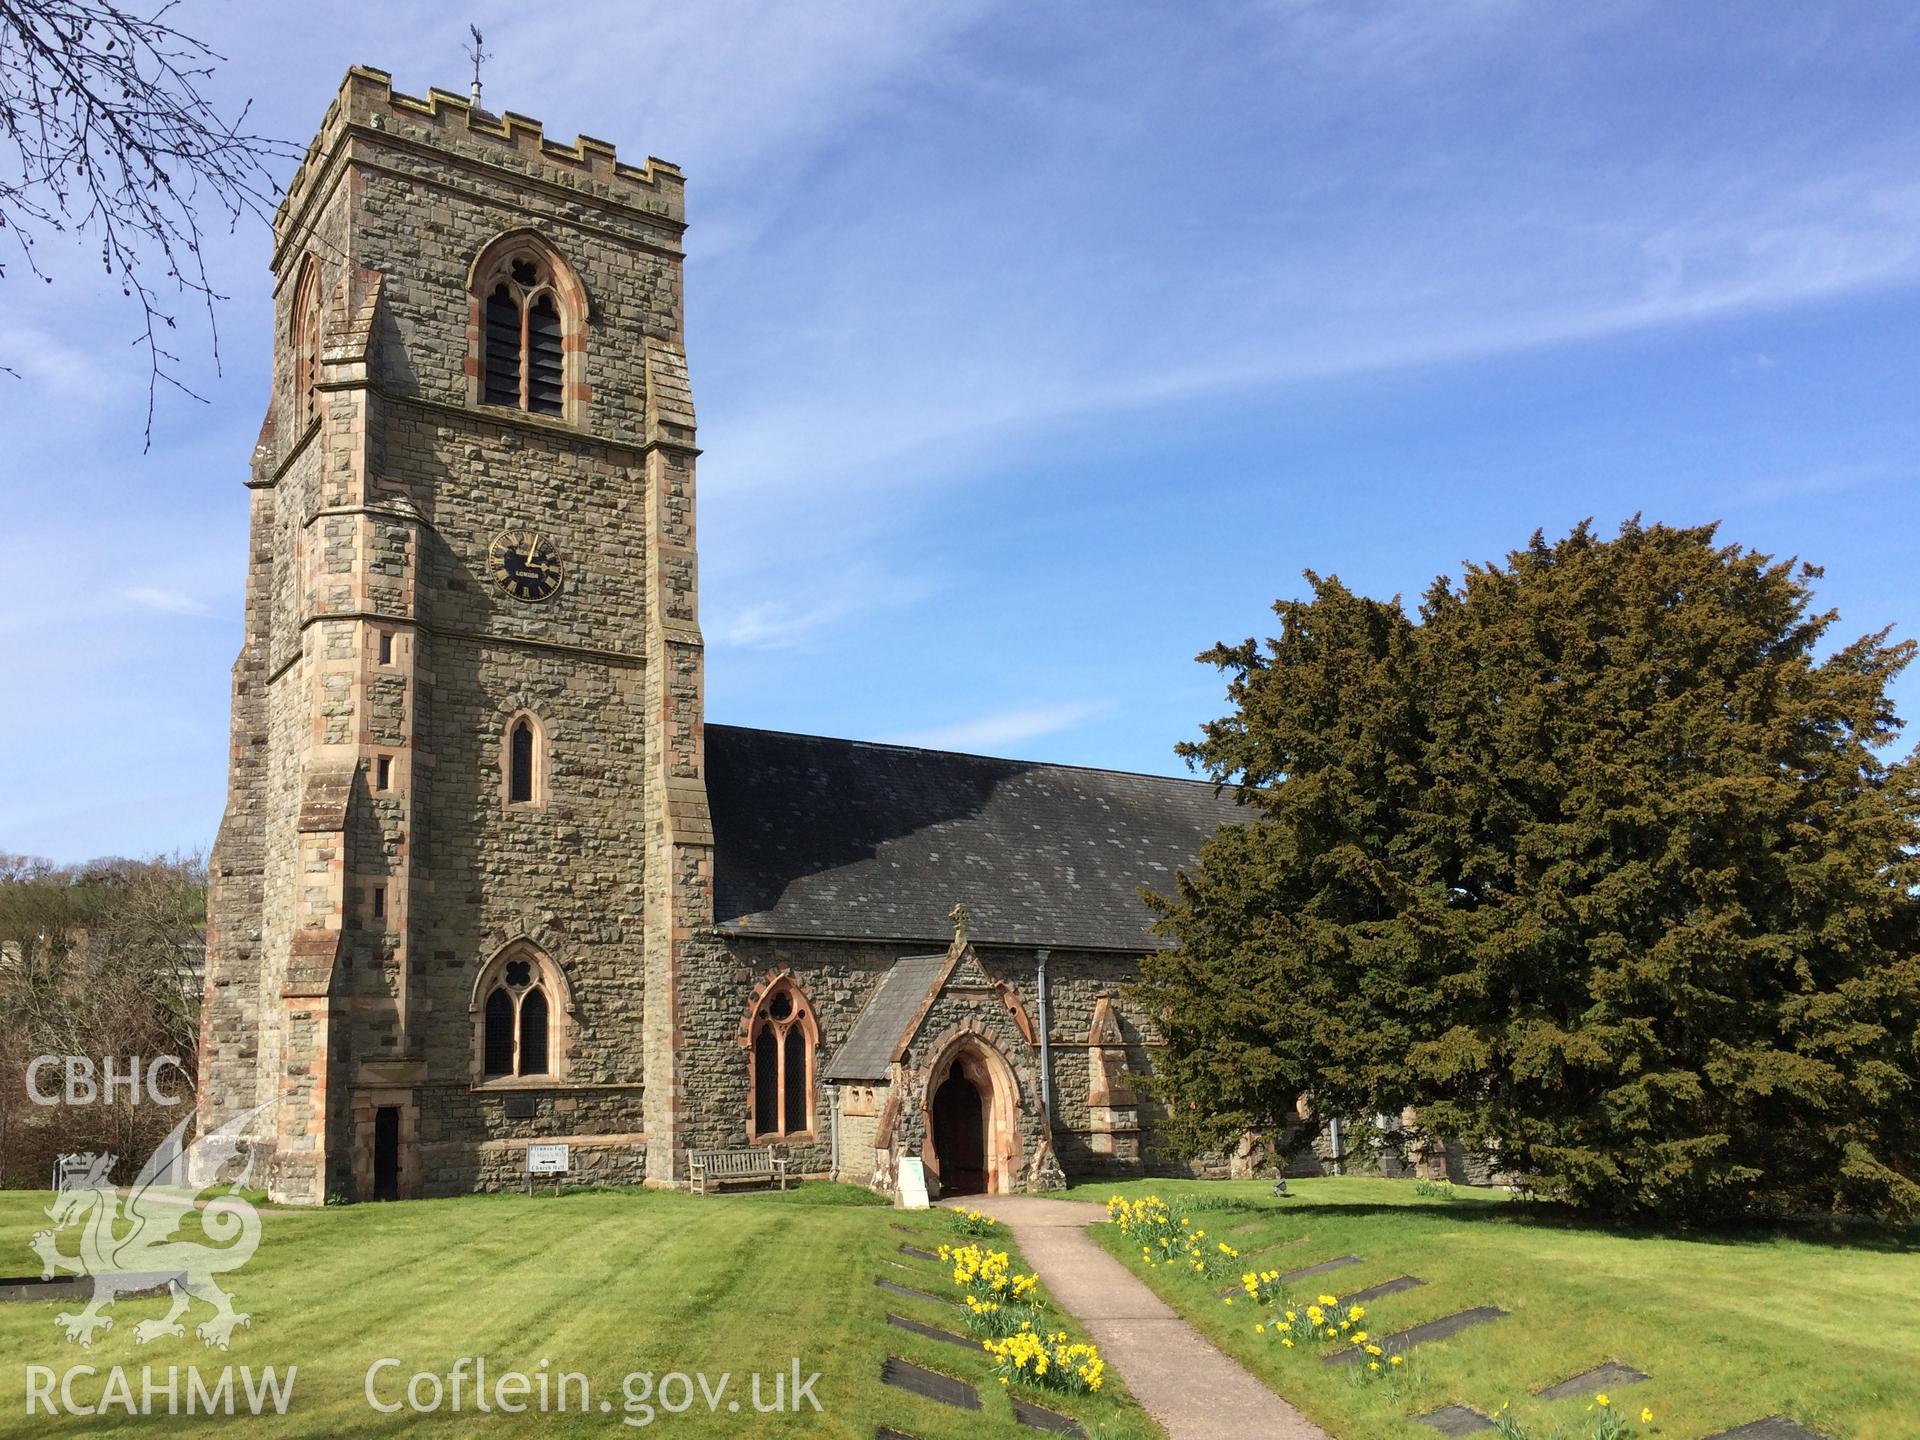 Colour photo showing view of St. Mary's Church, Llanfair Caereinion, taken by Paul R. Davis, 2018.